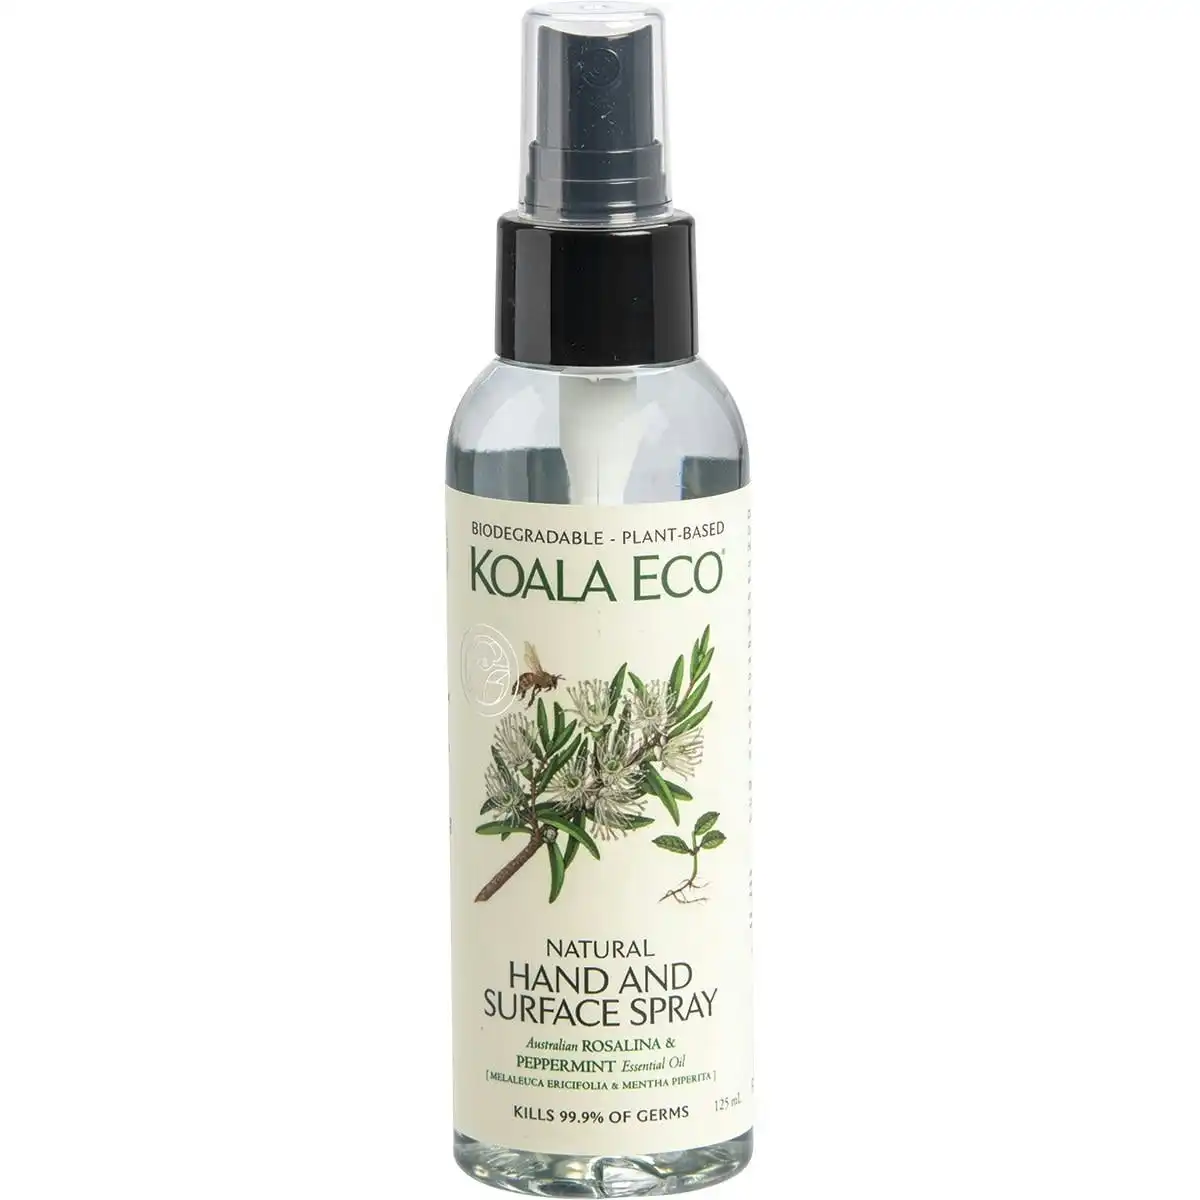 Koala Eco Natural Hand And Surface Spray Rosalina & Peppermint 125ml